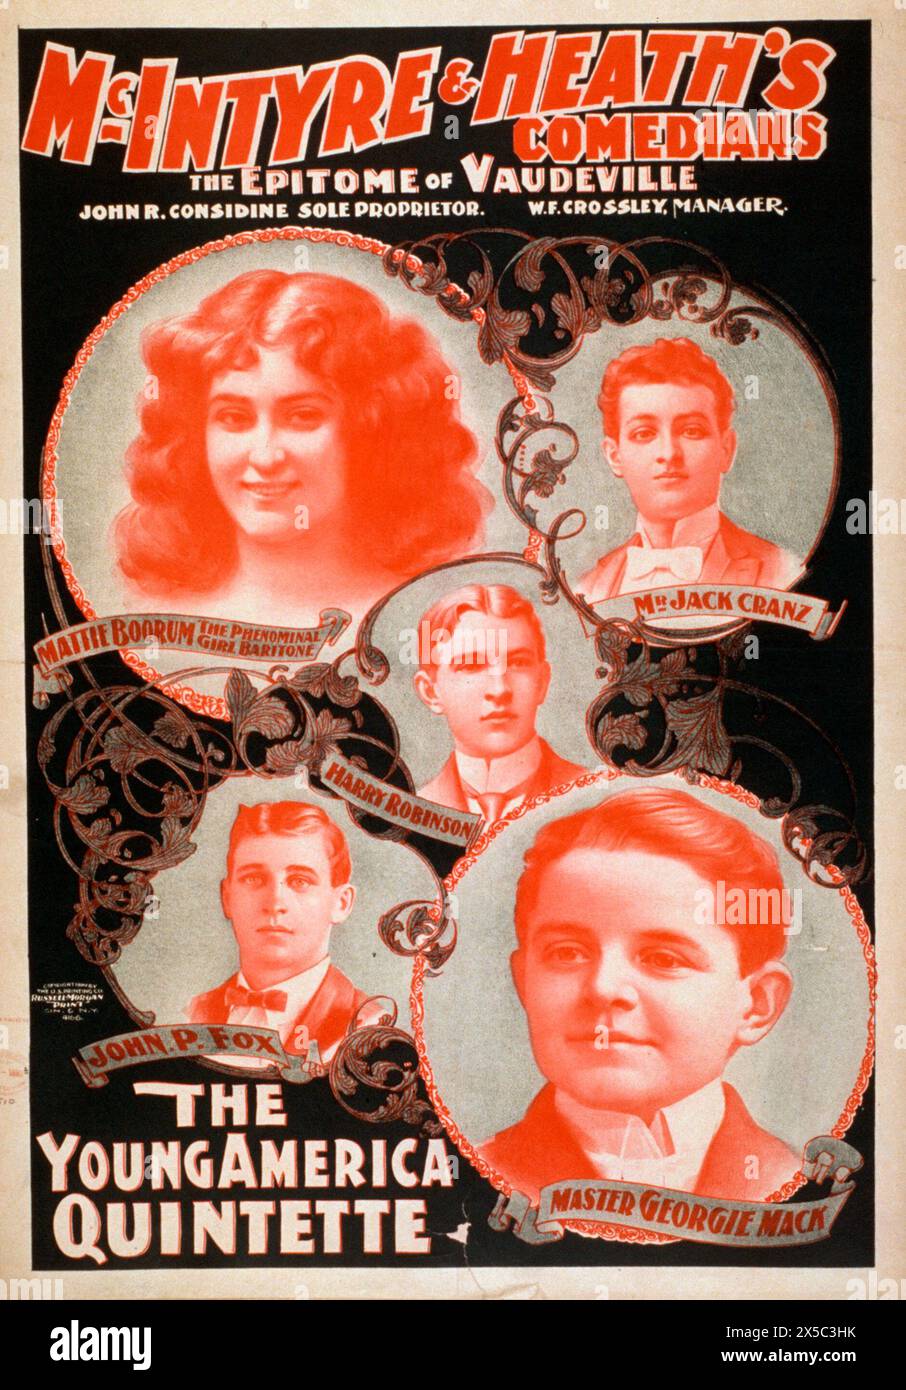 McIntyre & Heath's Comedians the epitome of vaudeville, 1899 Stock Photo